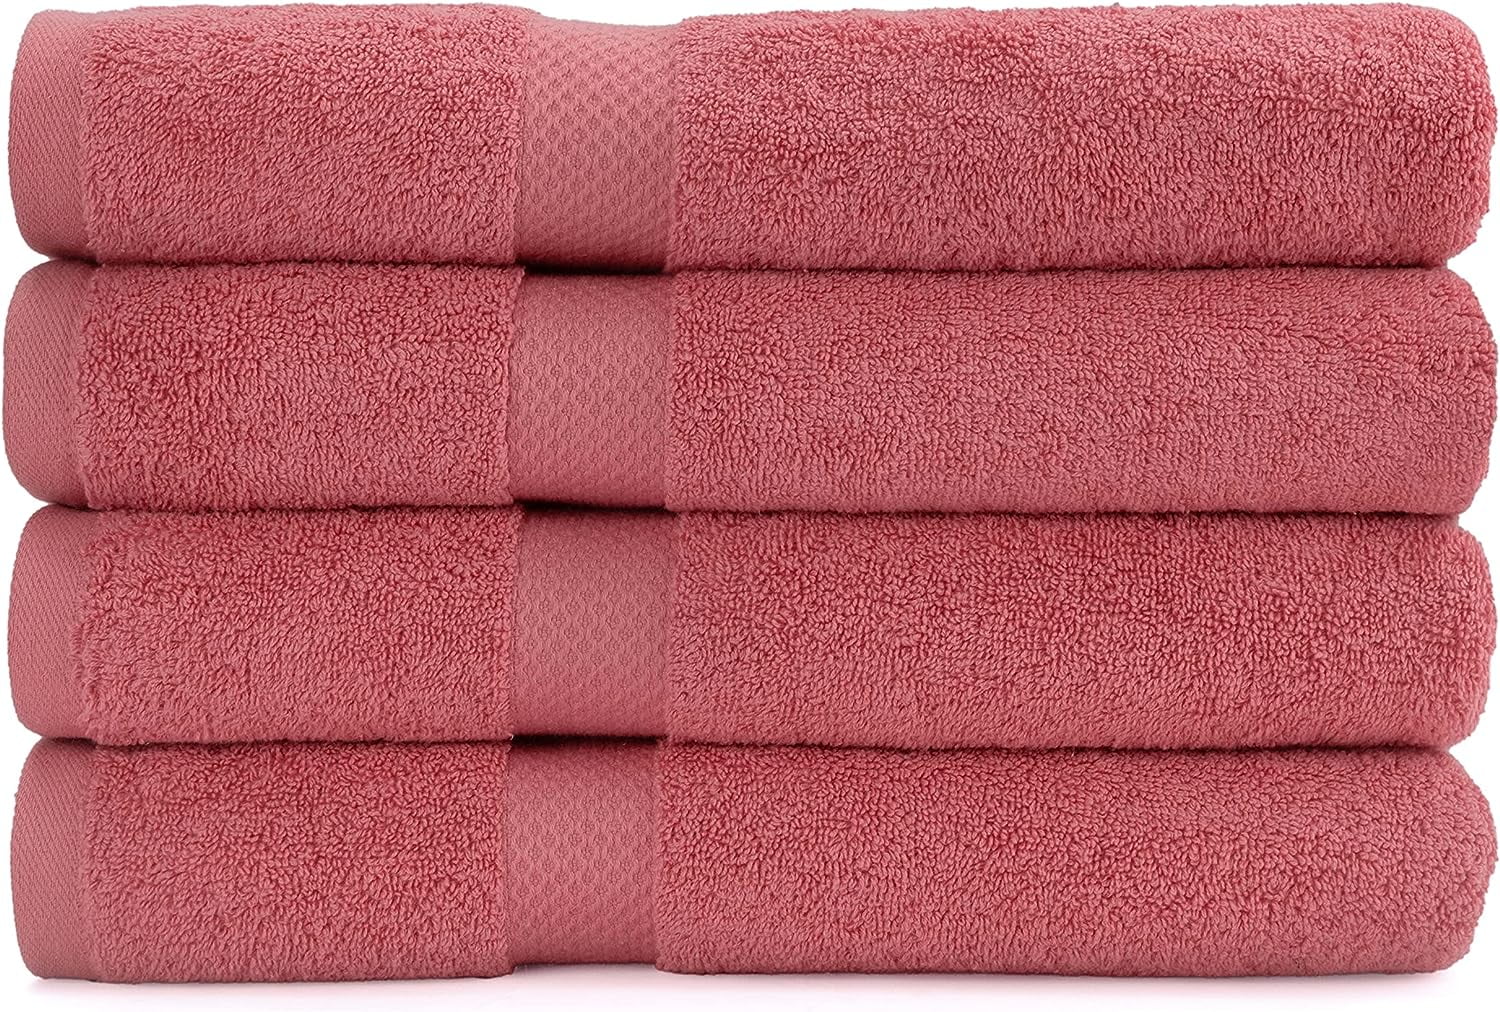  AKTI Premium 8 Piece Bathroom Luxury Towel Set, Hotel & Spa, 2 Bath  Towel 2 Hand Towel 4 Wash Cloth Bathroom Set, 100% Cotton Bathroom Towels,  Extra, Soft Absorbent & Quick